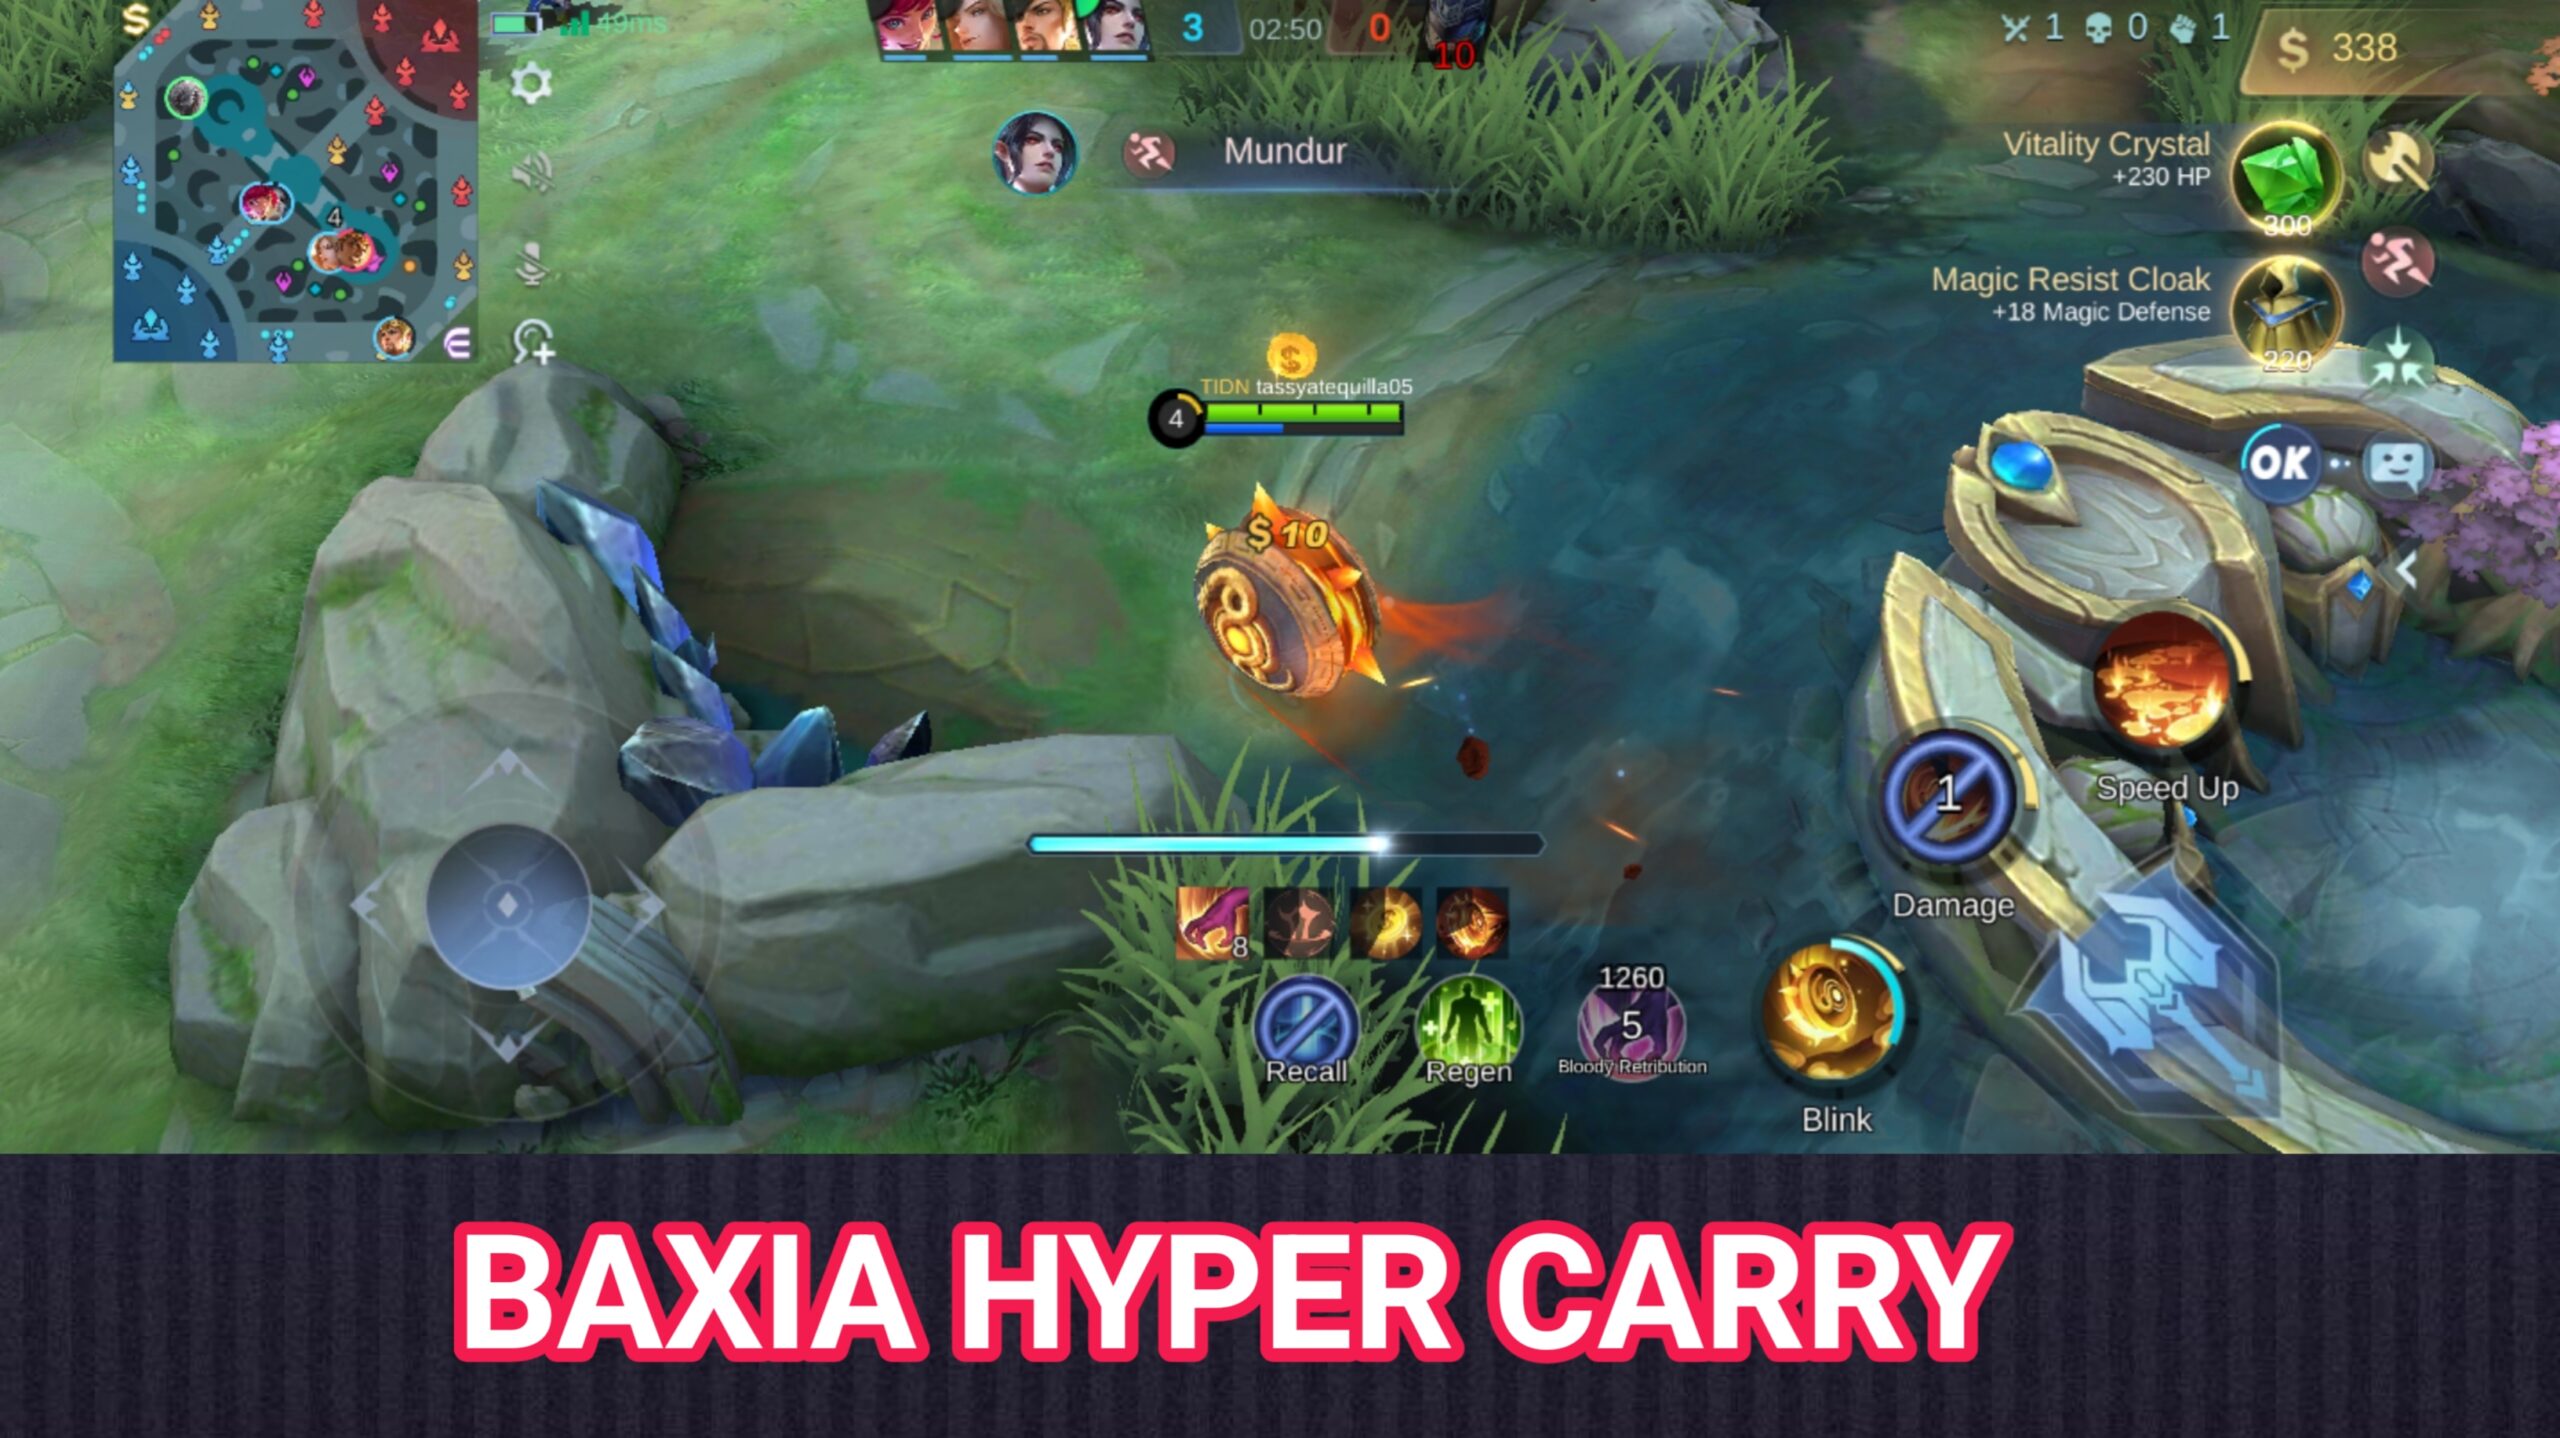 Baxia hyper carry